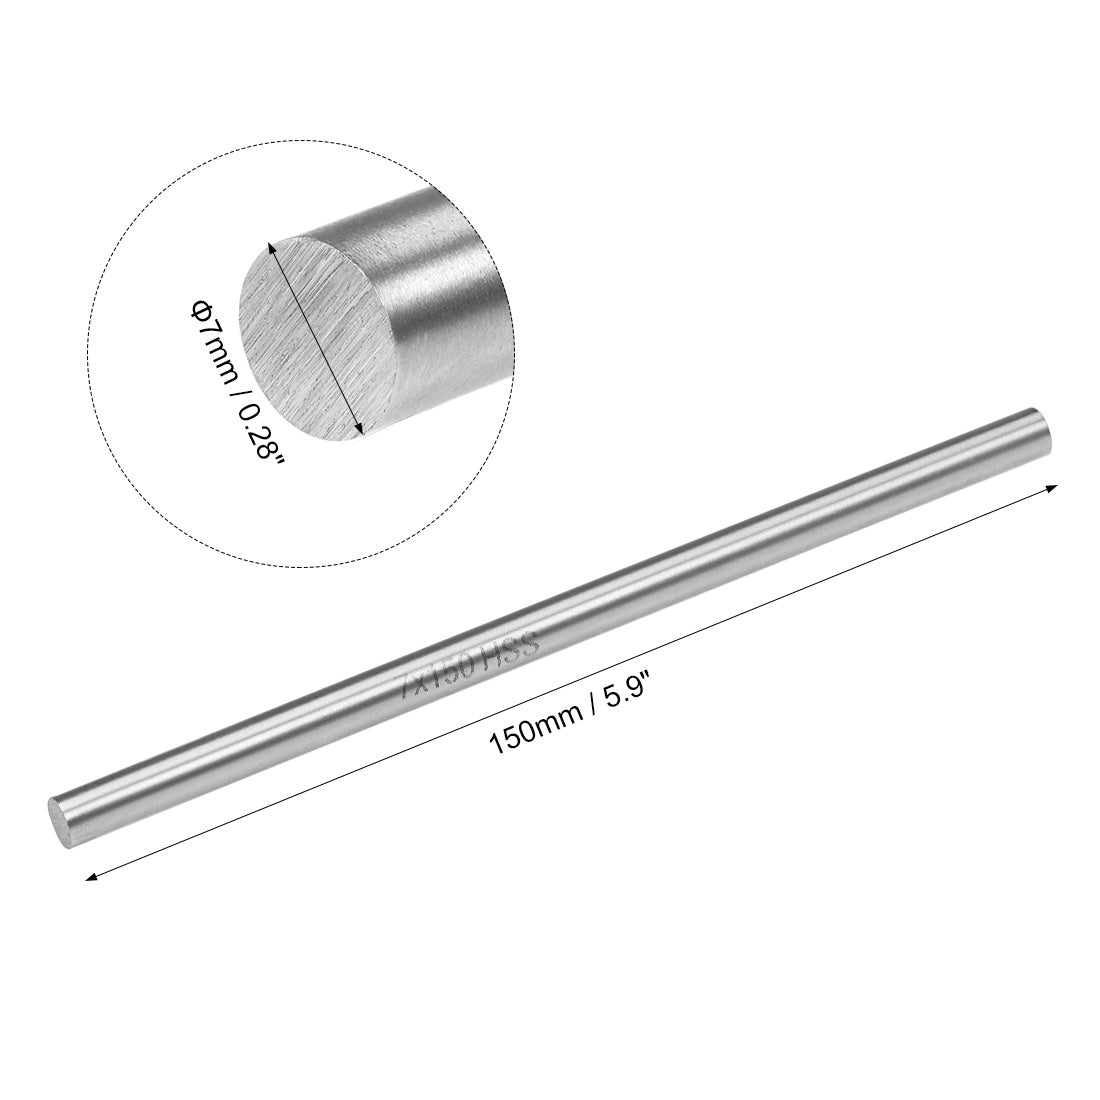 uxcell Uxcell HSS Lathe Round Rod Solid Shaft Bar 150mm Length 2Pcs